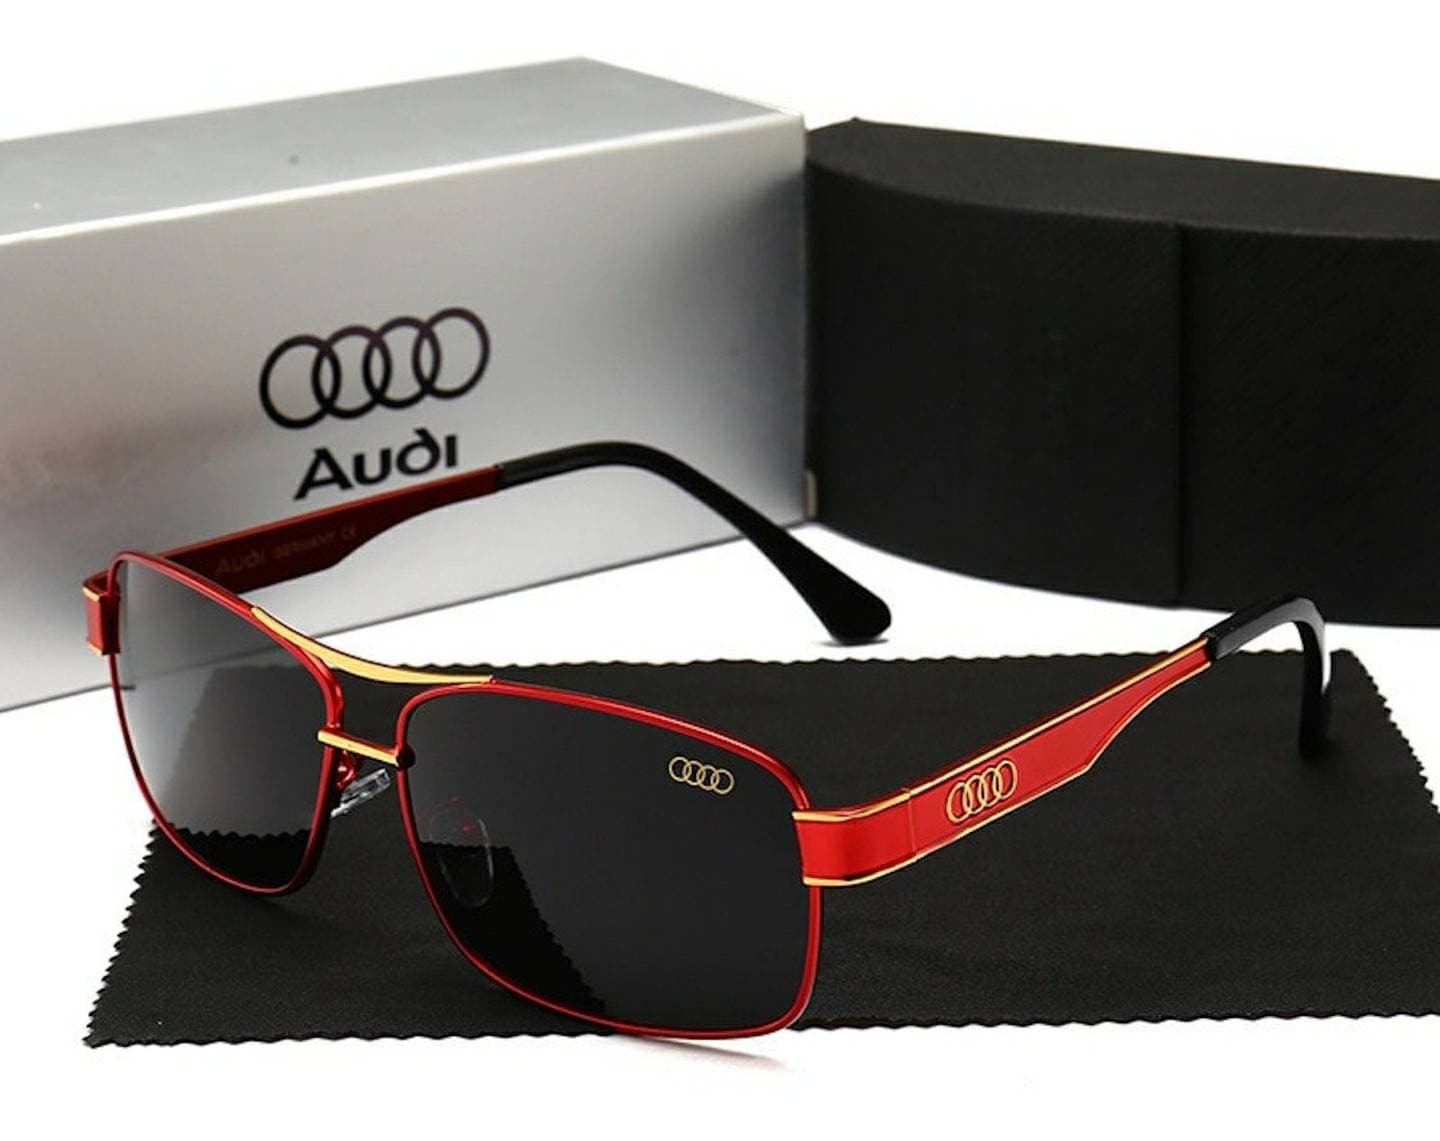 vis ijzer plak Top of the line Audi polarized sunglasses for men ultra-light - Etsy België